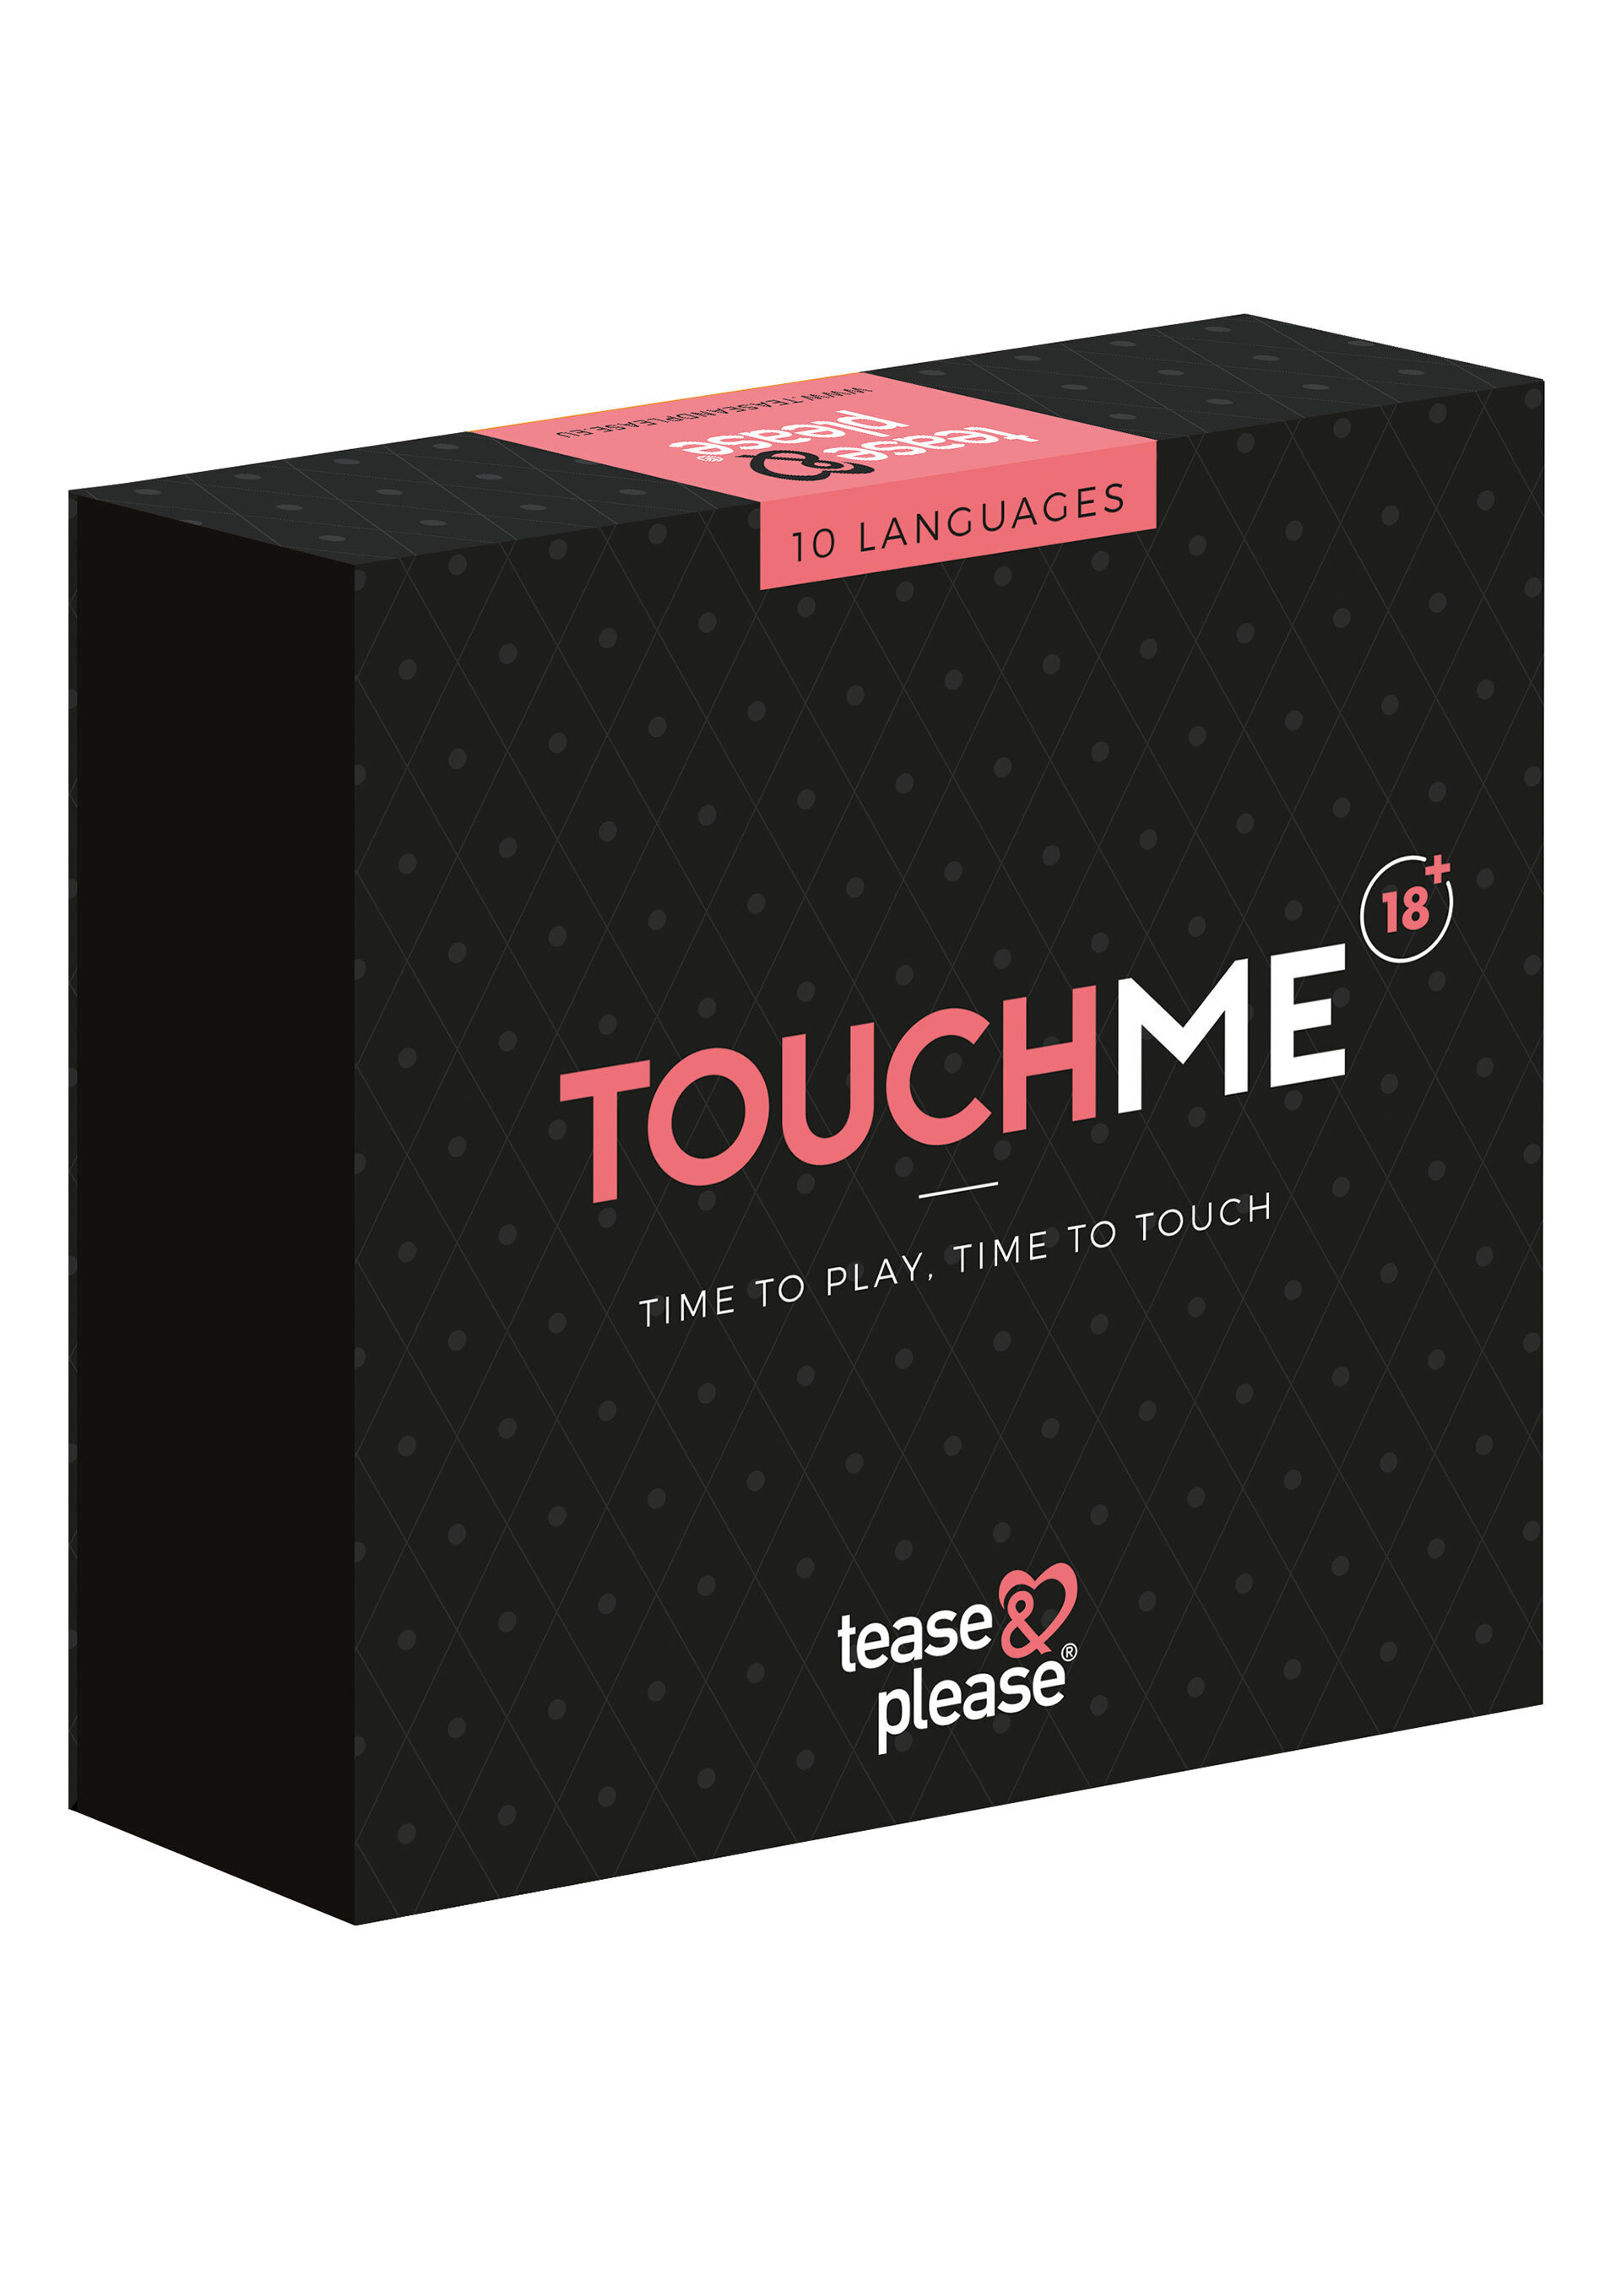 Xxxme-„TouchMe“ laikas žaisti, laikas liesti (NL-En-de-fr-it-se-no-pl-ru)  kaina | n18.pigu.lt